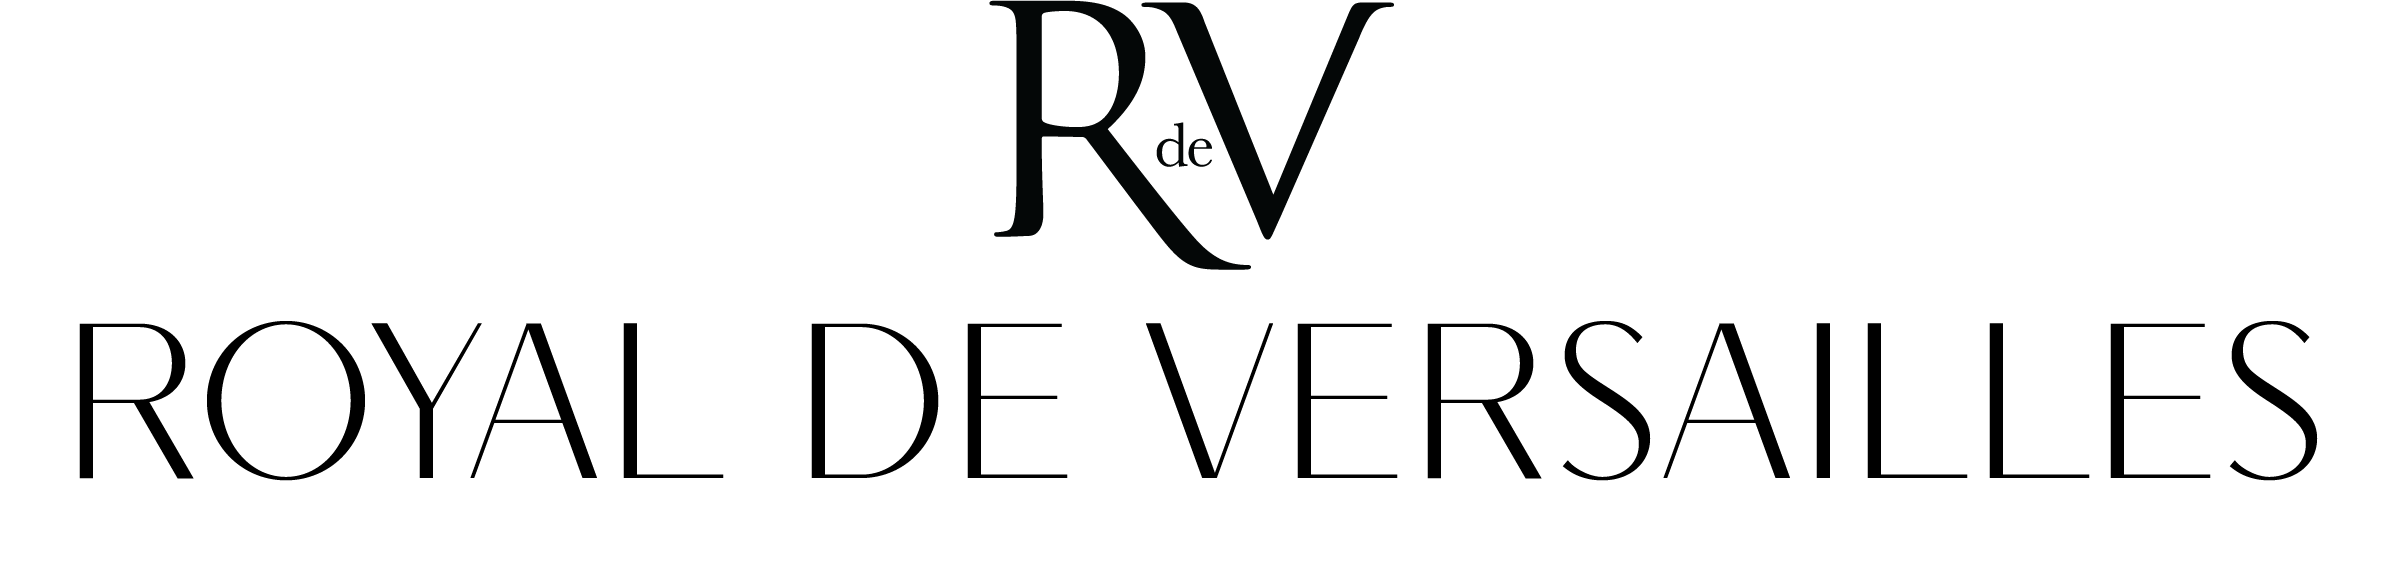 RDV Full Logo Black